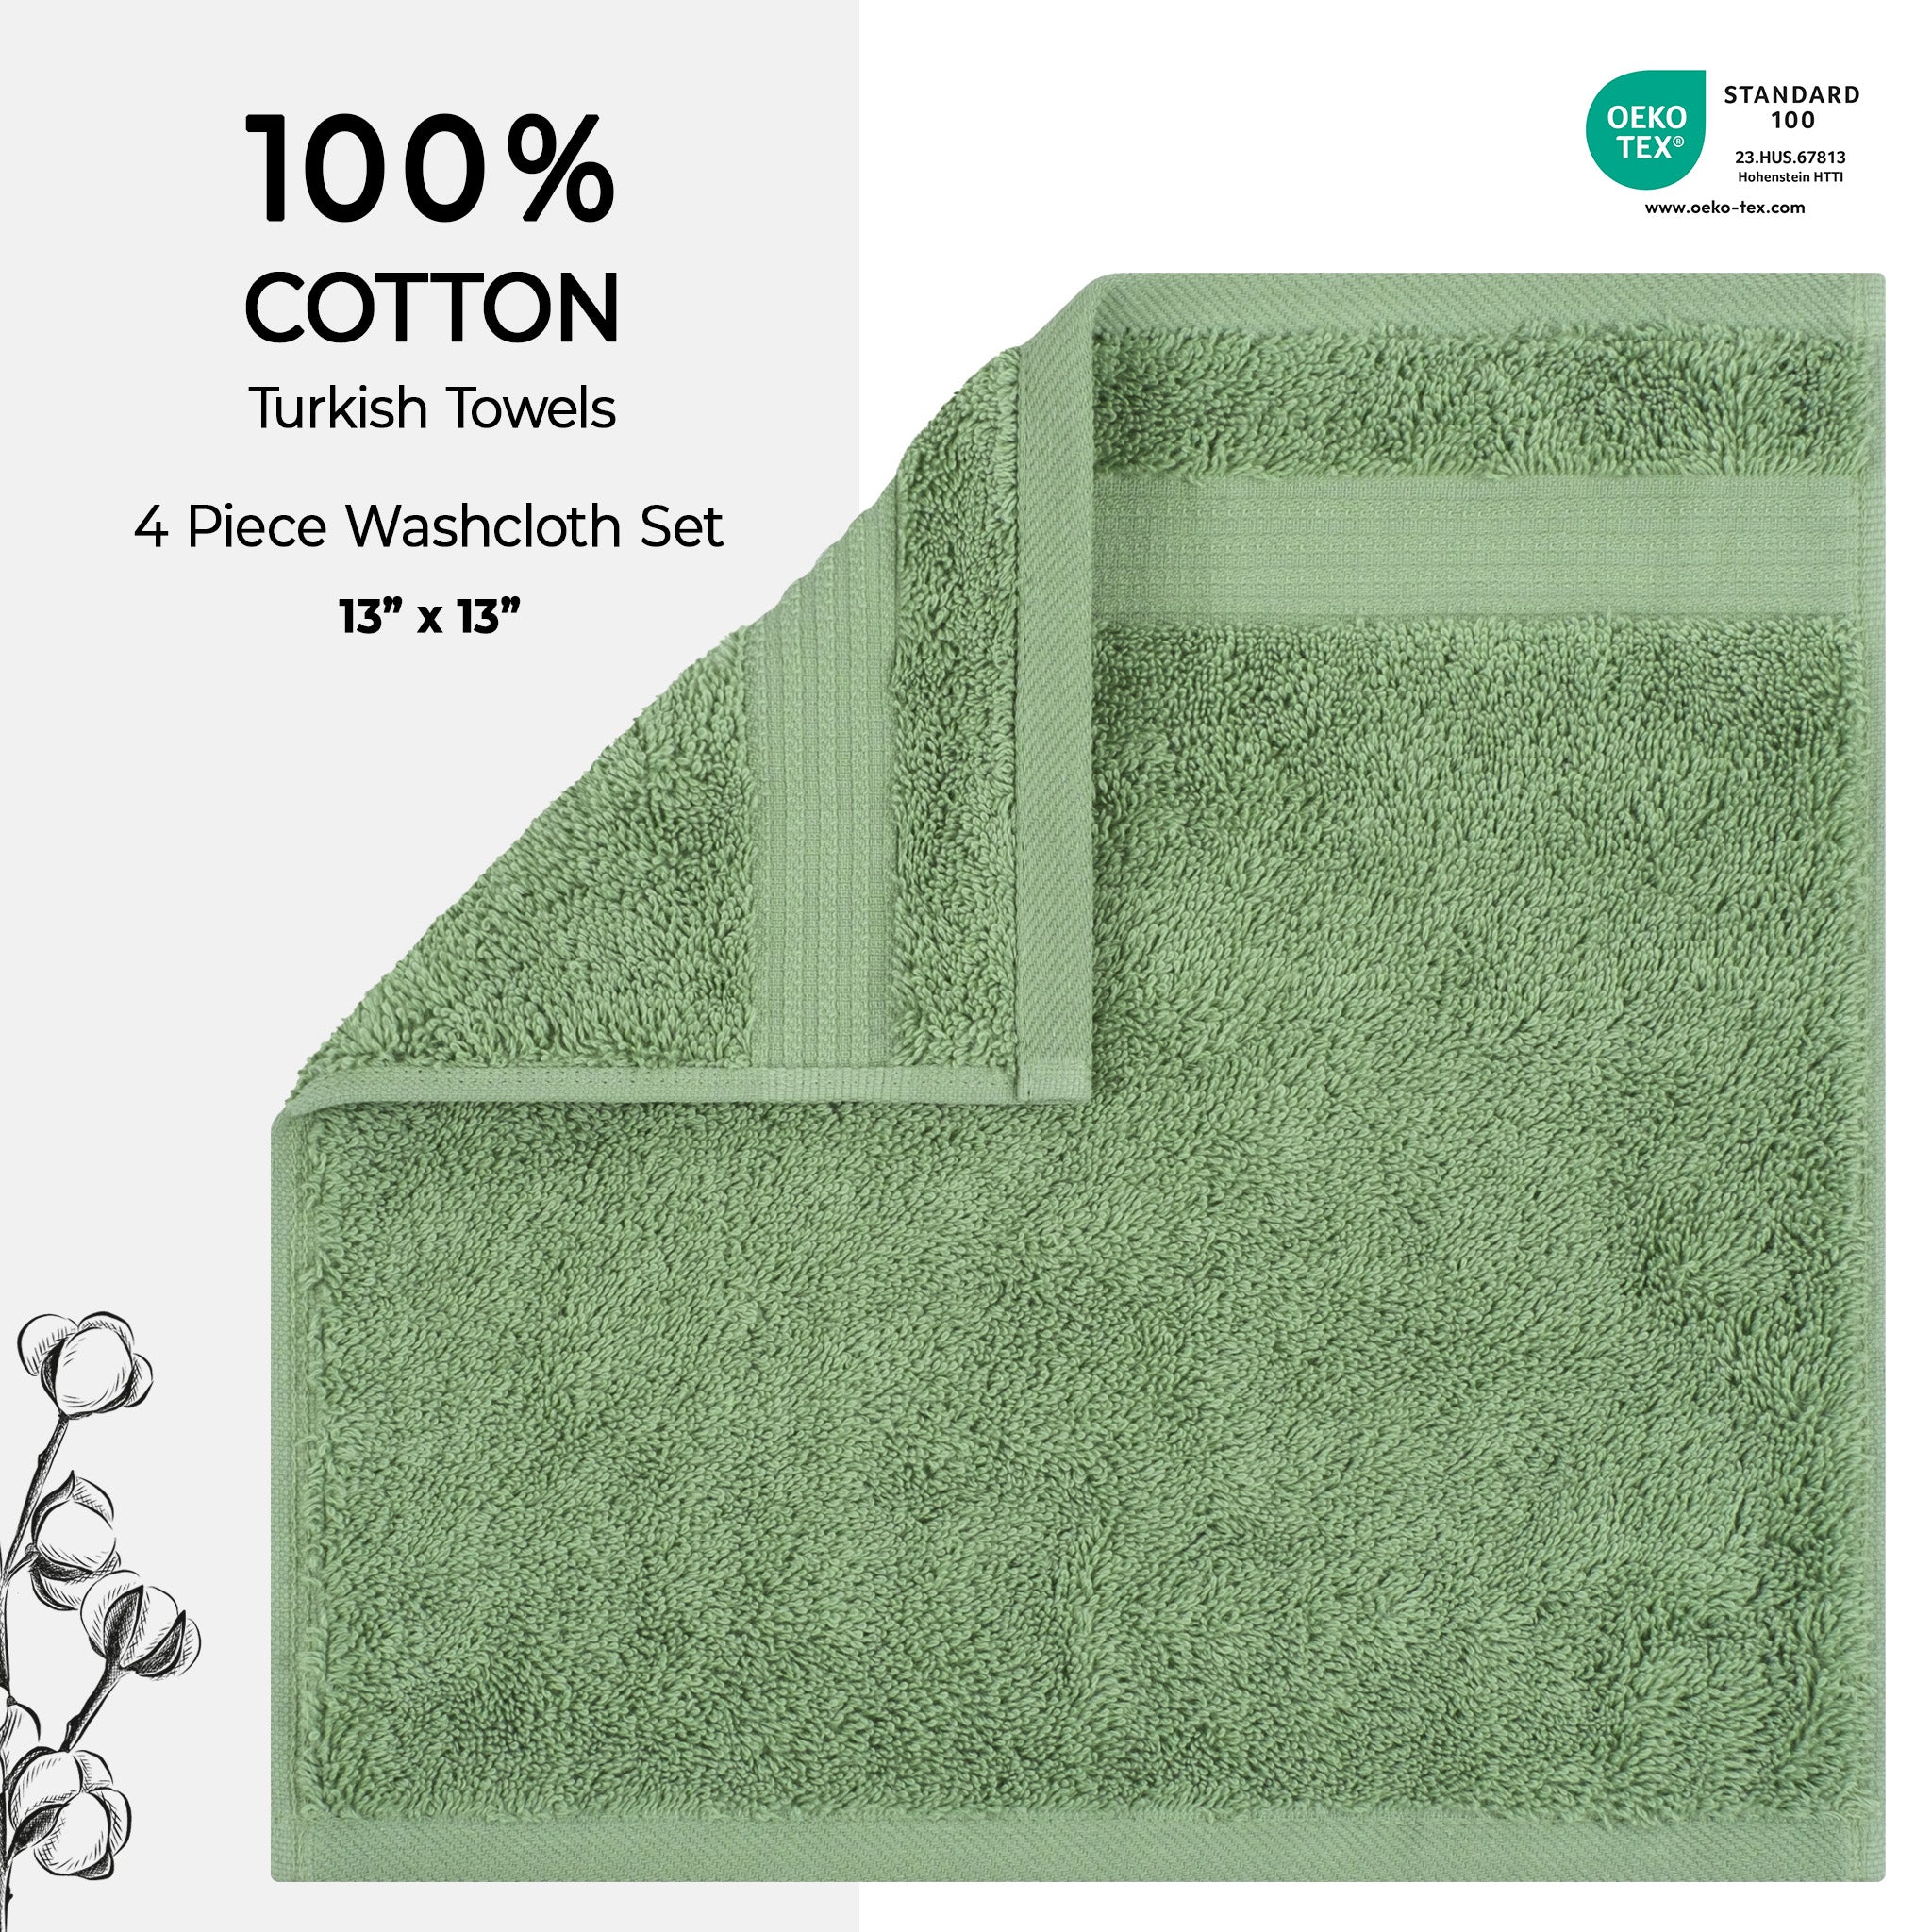 American Soft Linen Bekos 100% Cotton Turkish Towels, 4 Piece Washcloth Towel Set -sage-green-02